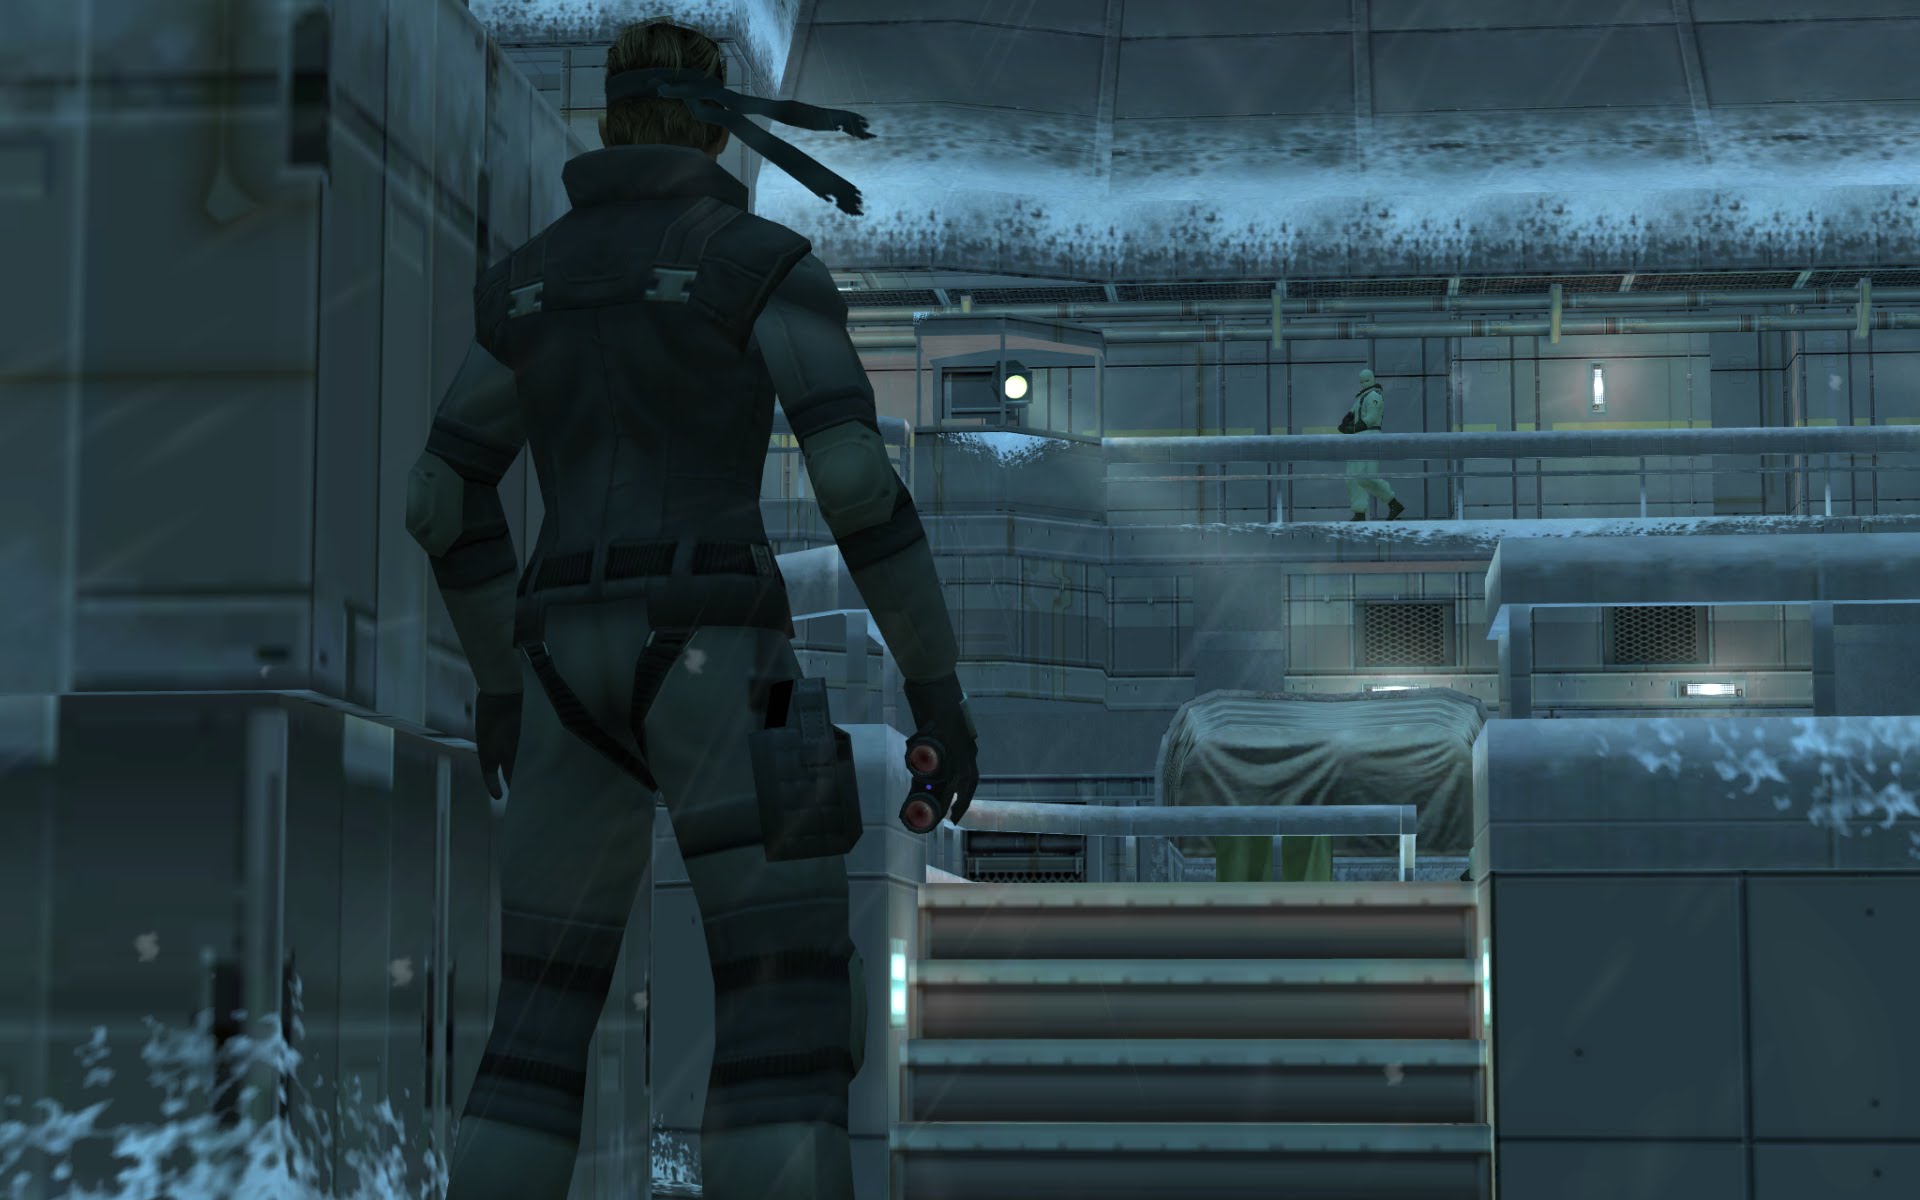 Unreal Engine 5 Metal Gear Solid 3 Remake Gameplay 